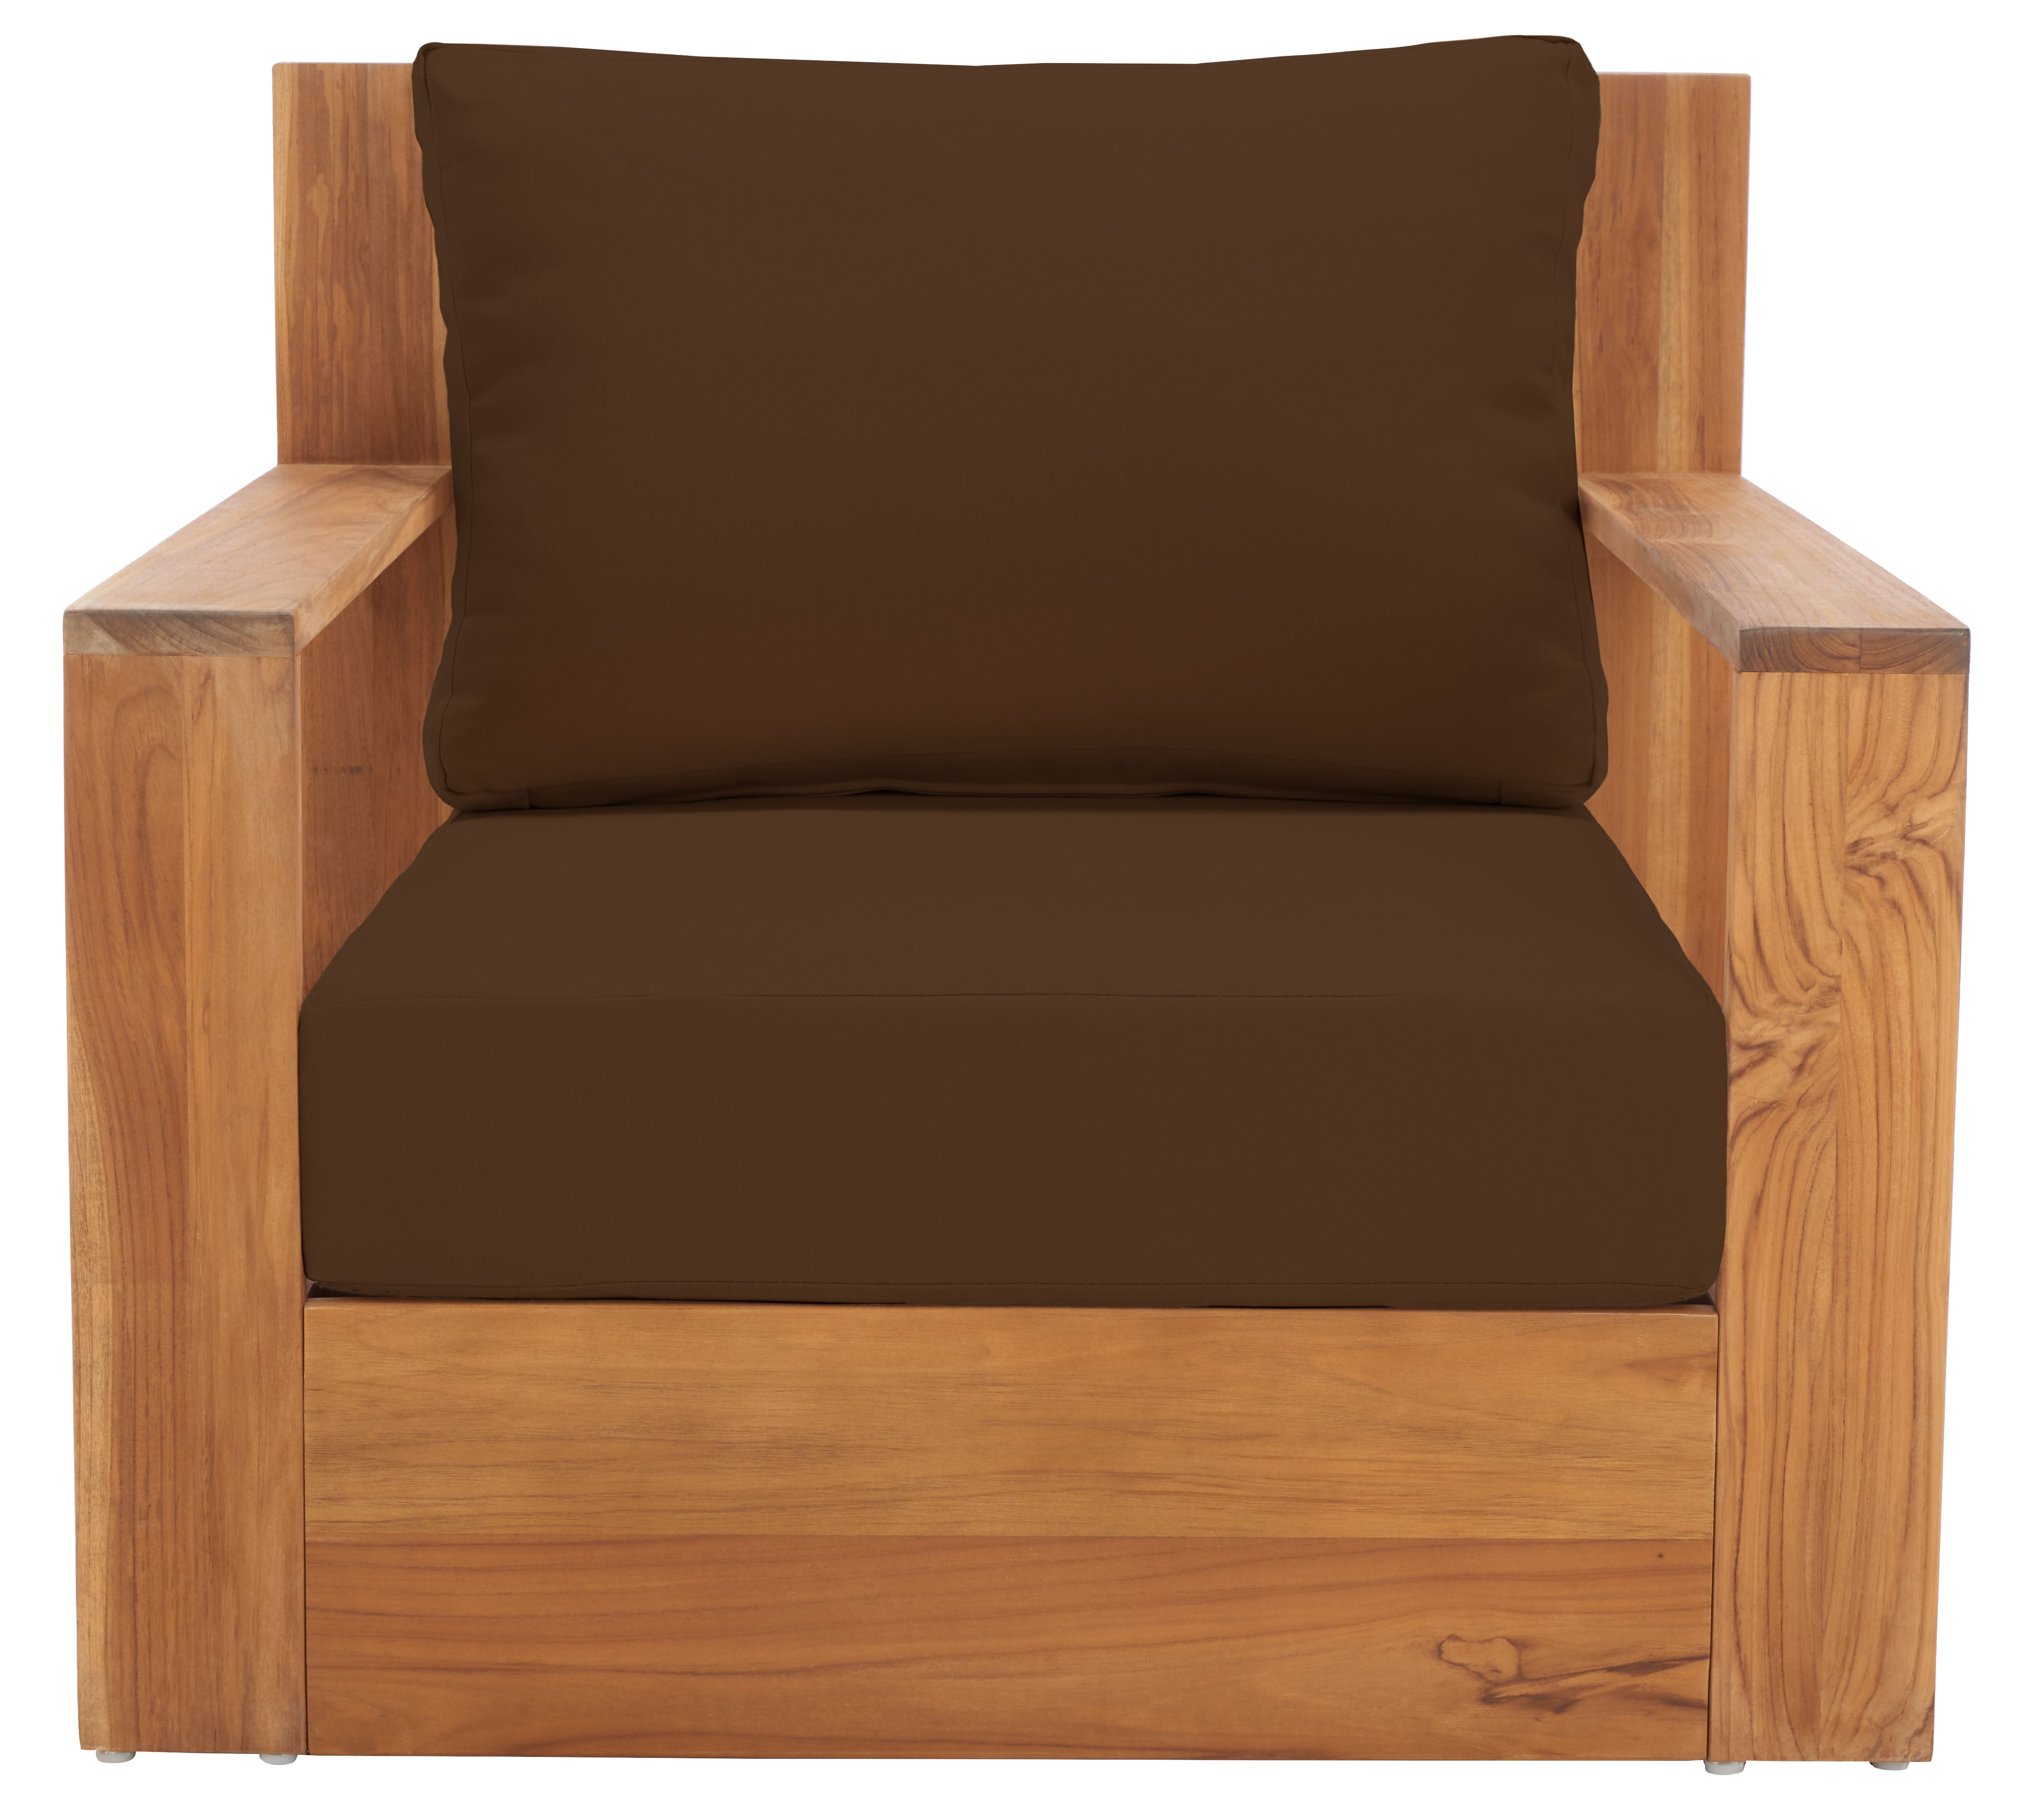 Safavieh Kauai Brazilian Teak Patio Chair, Natural / Beige - Natural / Dark Brown